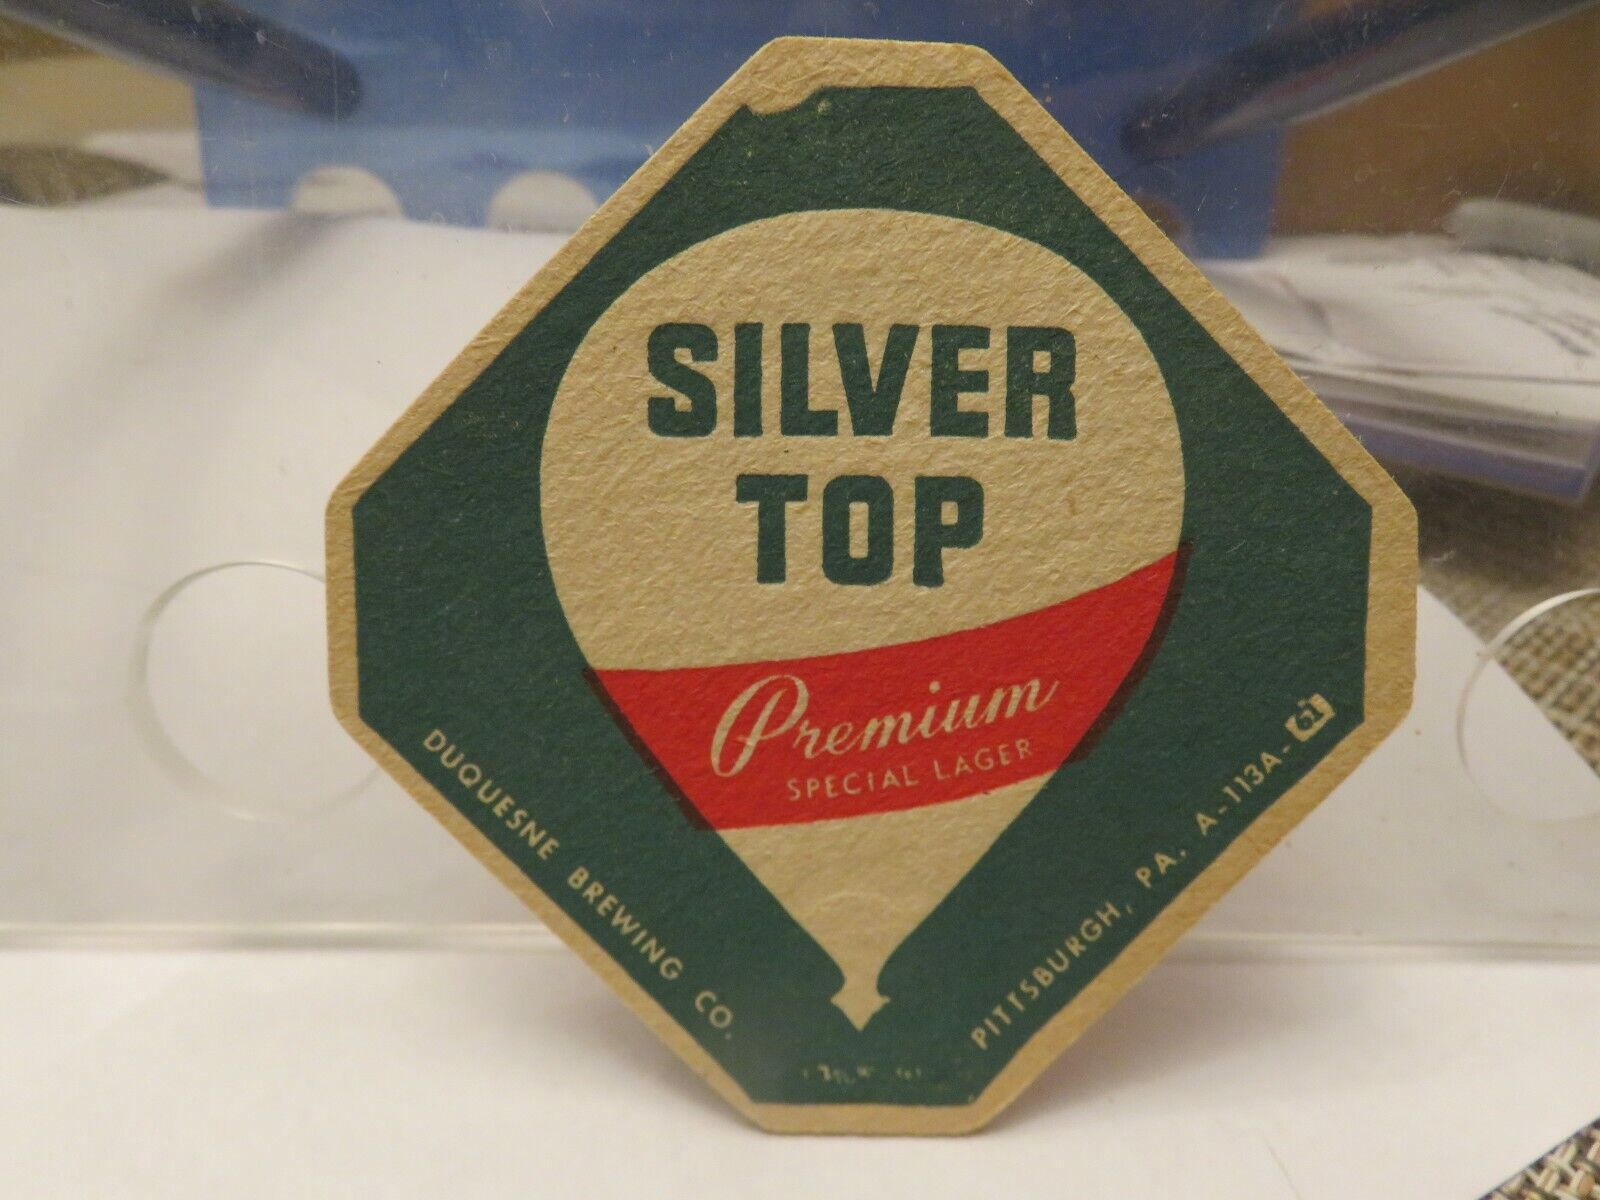 Vintage DUQUESNE PILSENER BEER/SILVER TOP PREMIUM LAGER DOUBLE-SIDED COASTER